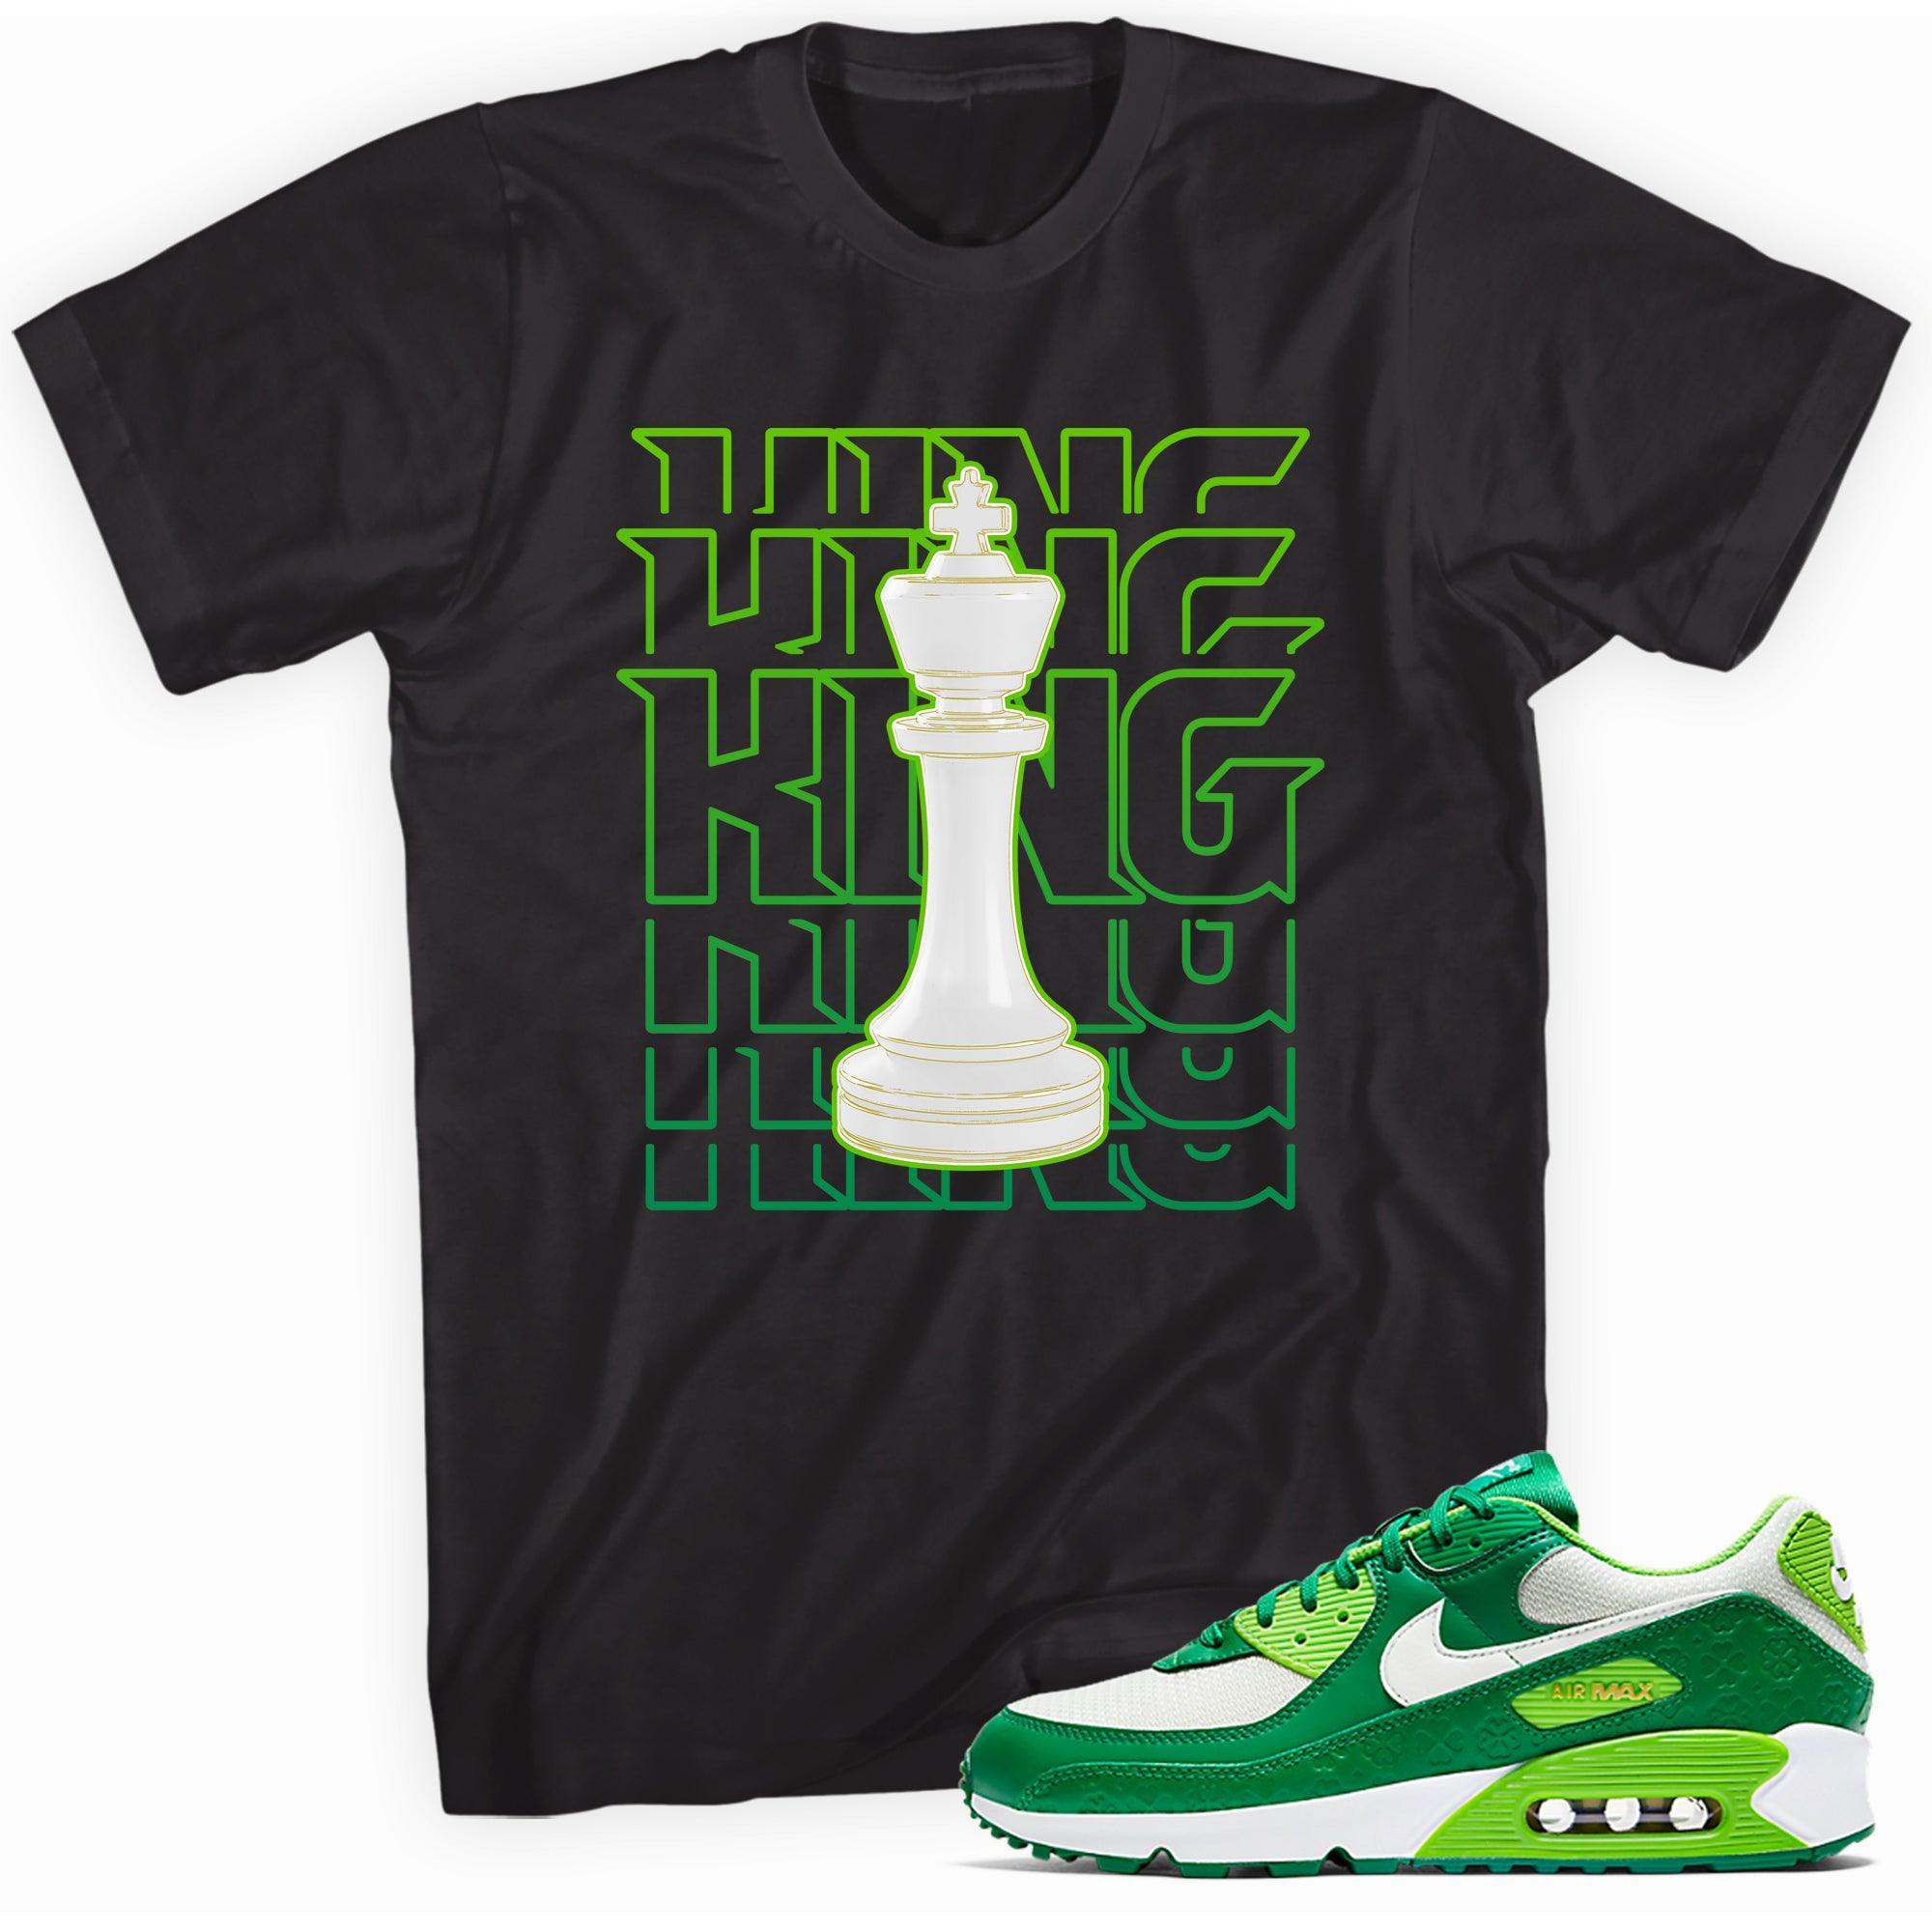 Black King Chess Shirt Nike Air Max 90 St Patricks Day 2021 photo